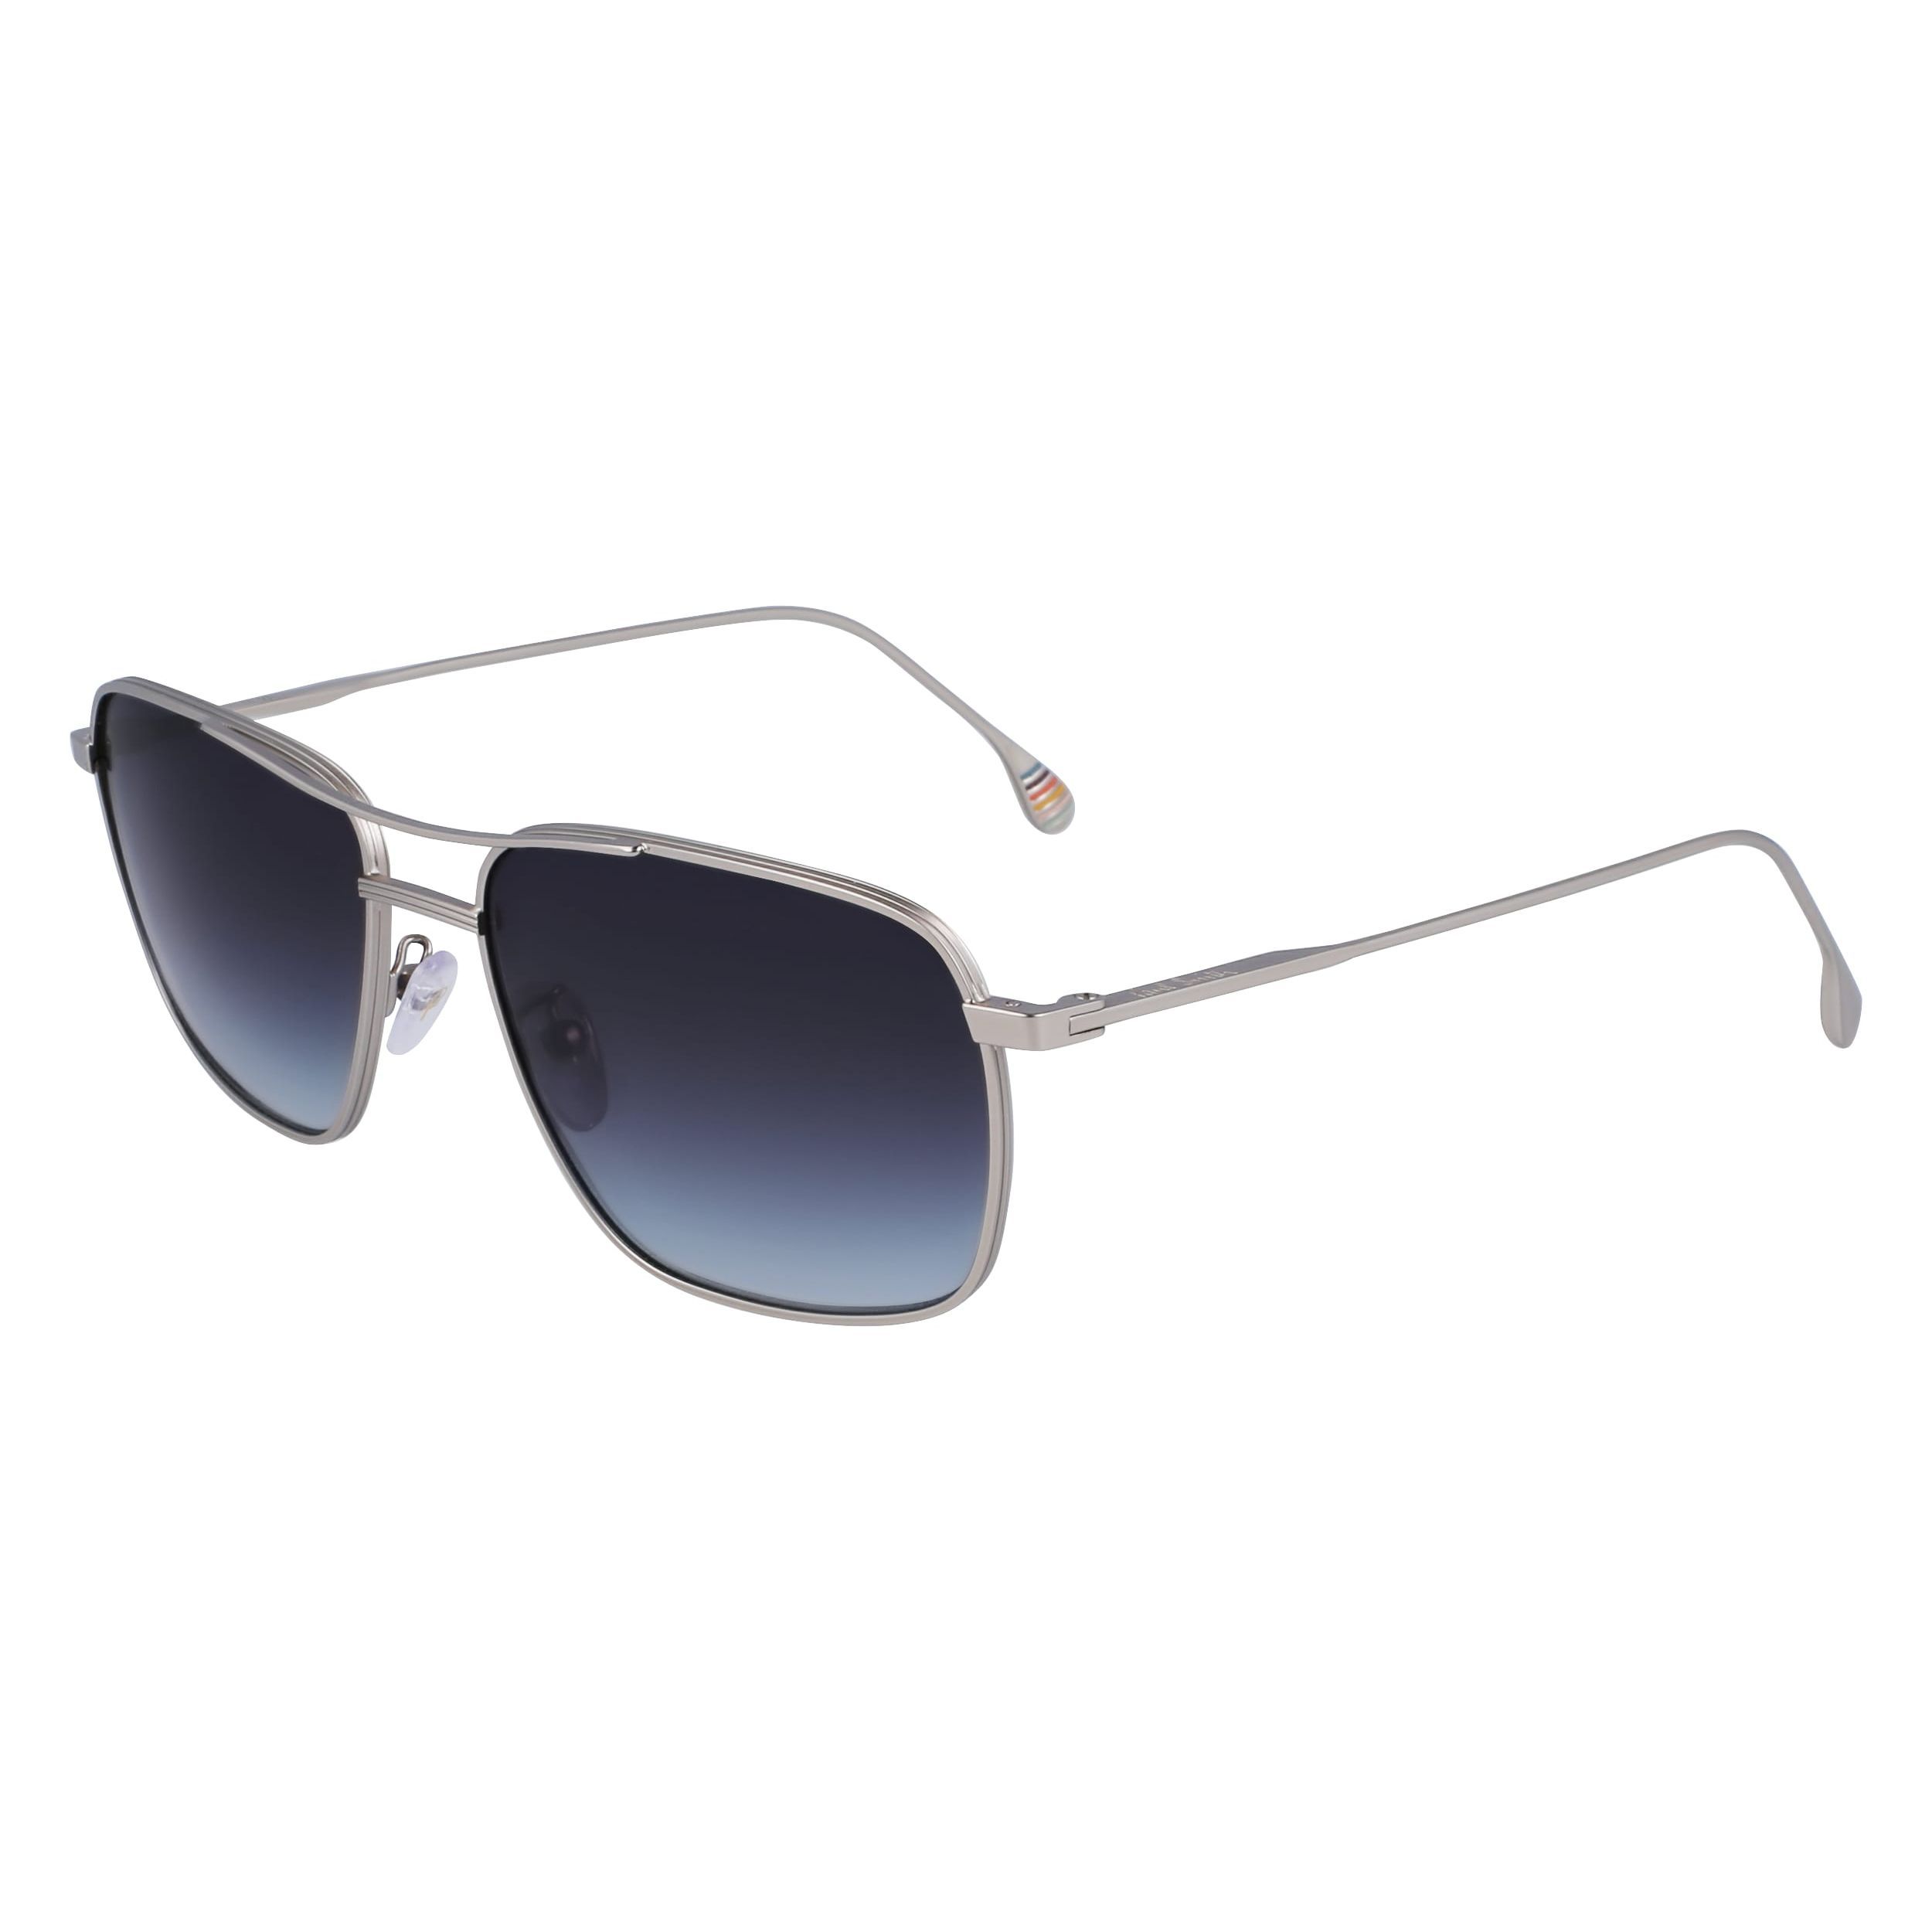 FOSTER Pilot Sunglasses 001 - size 58